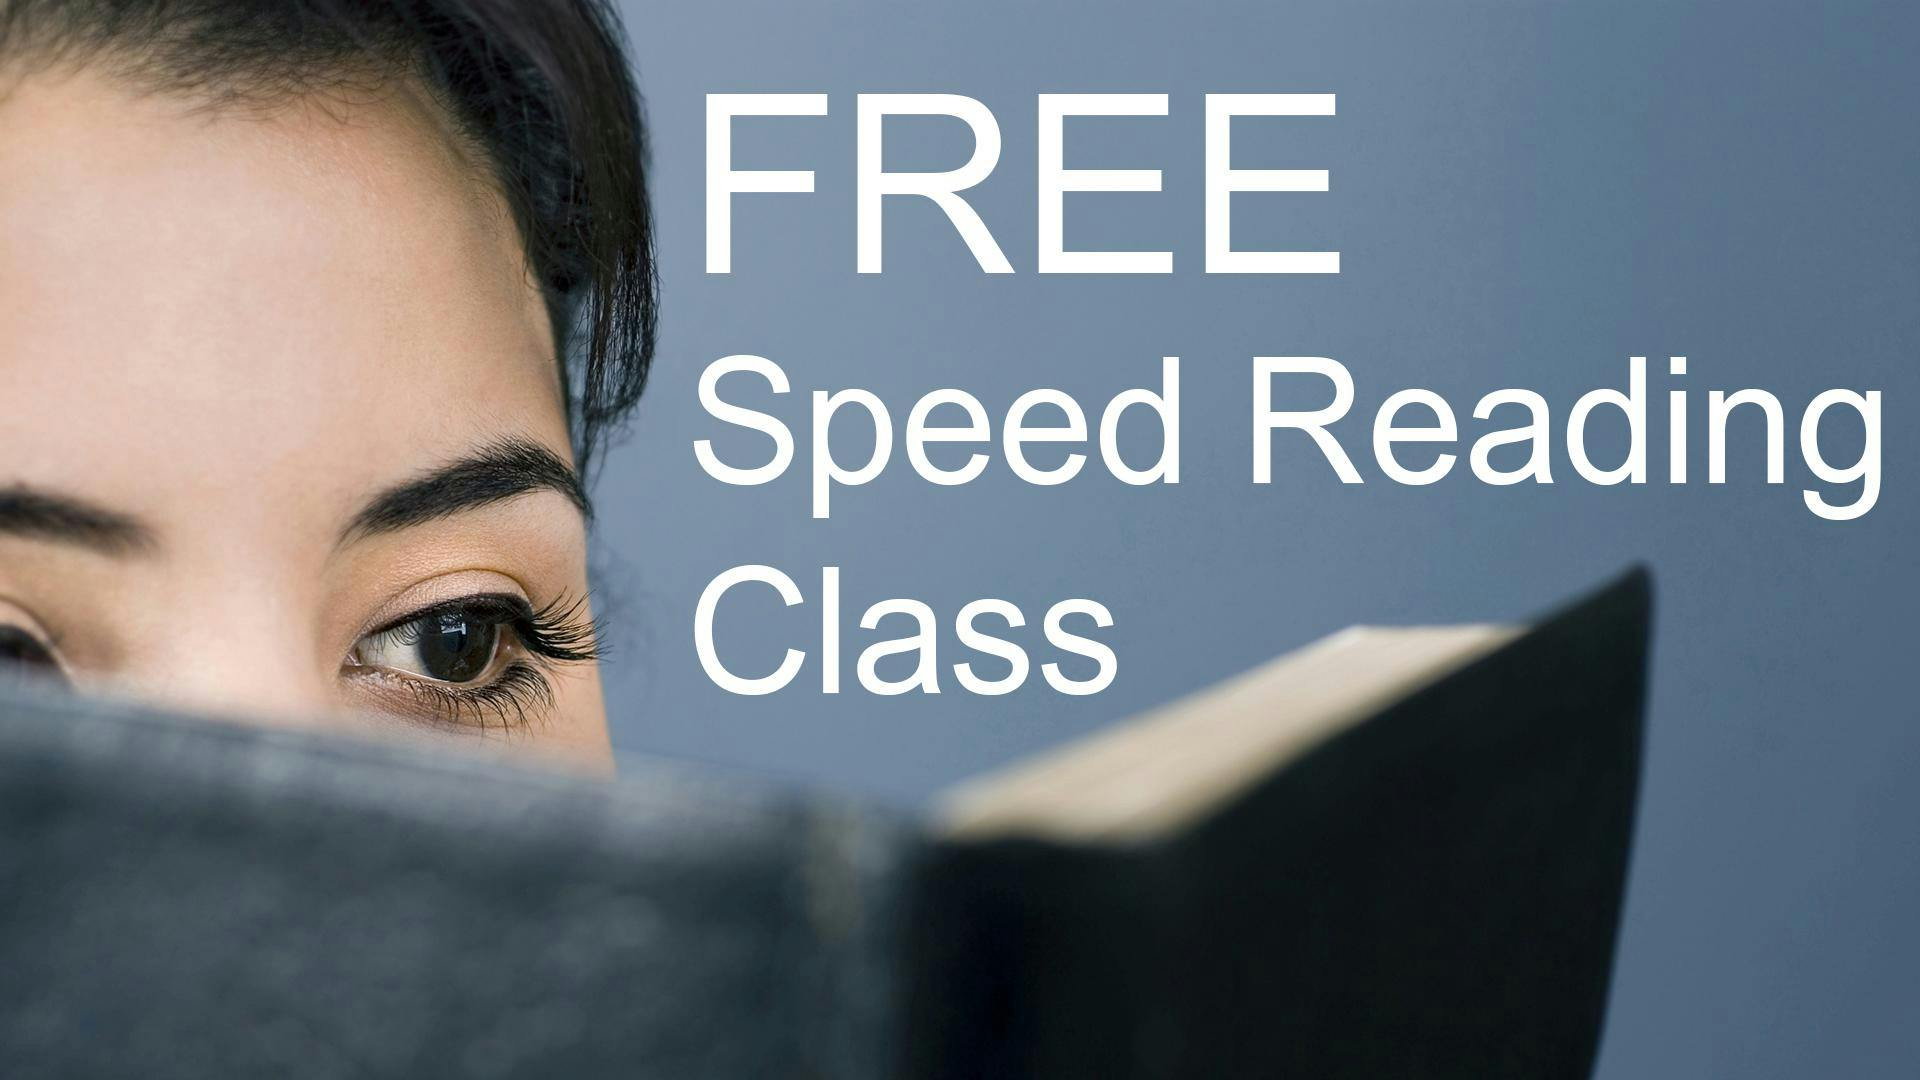 Free Speed Reading Class - Minneapolis